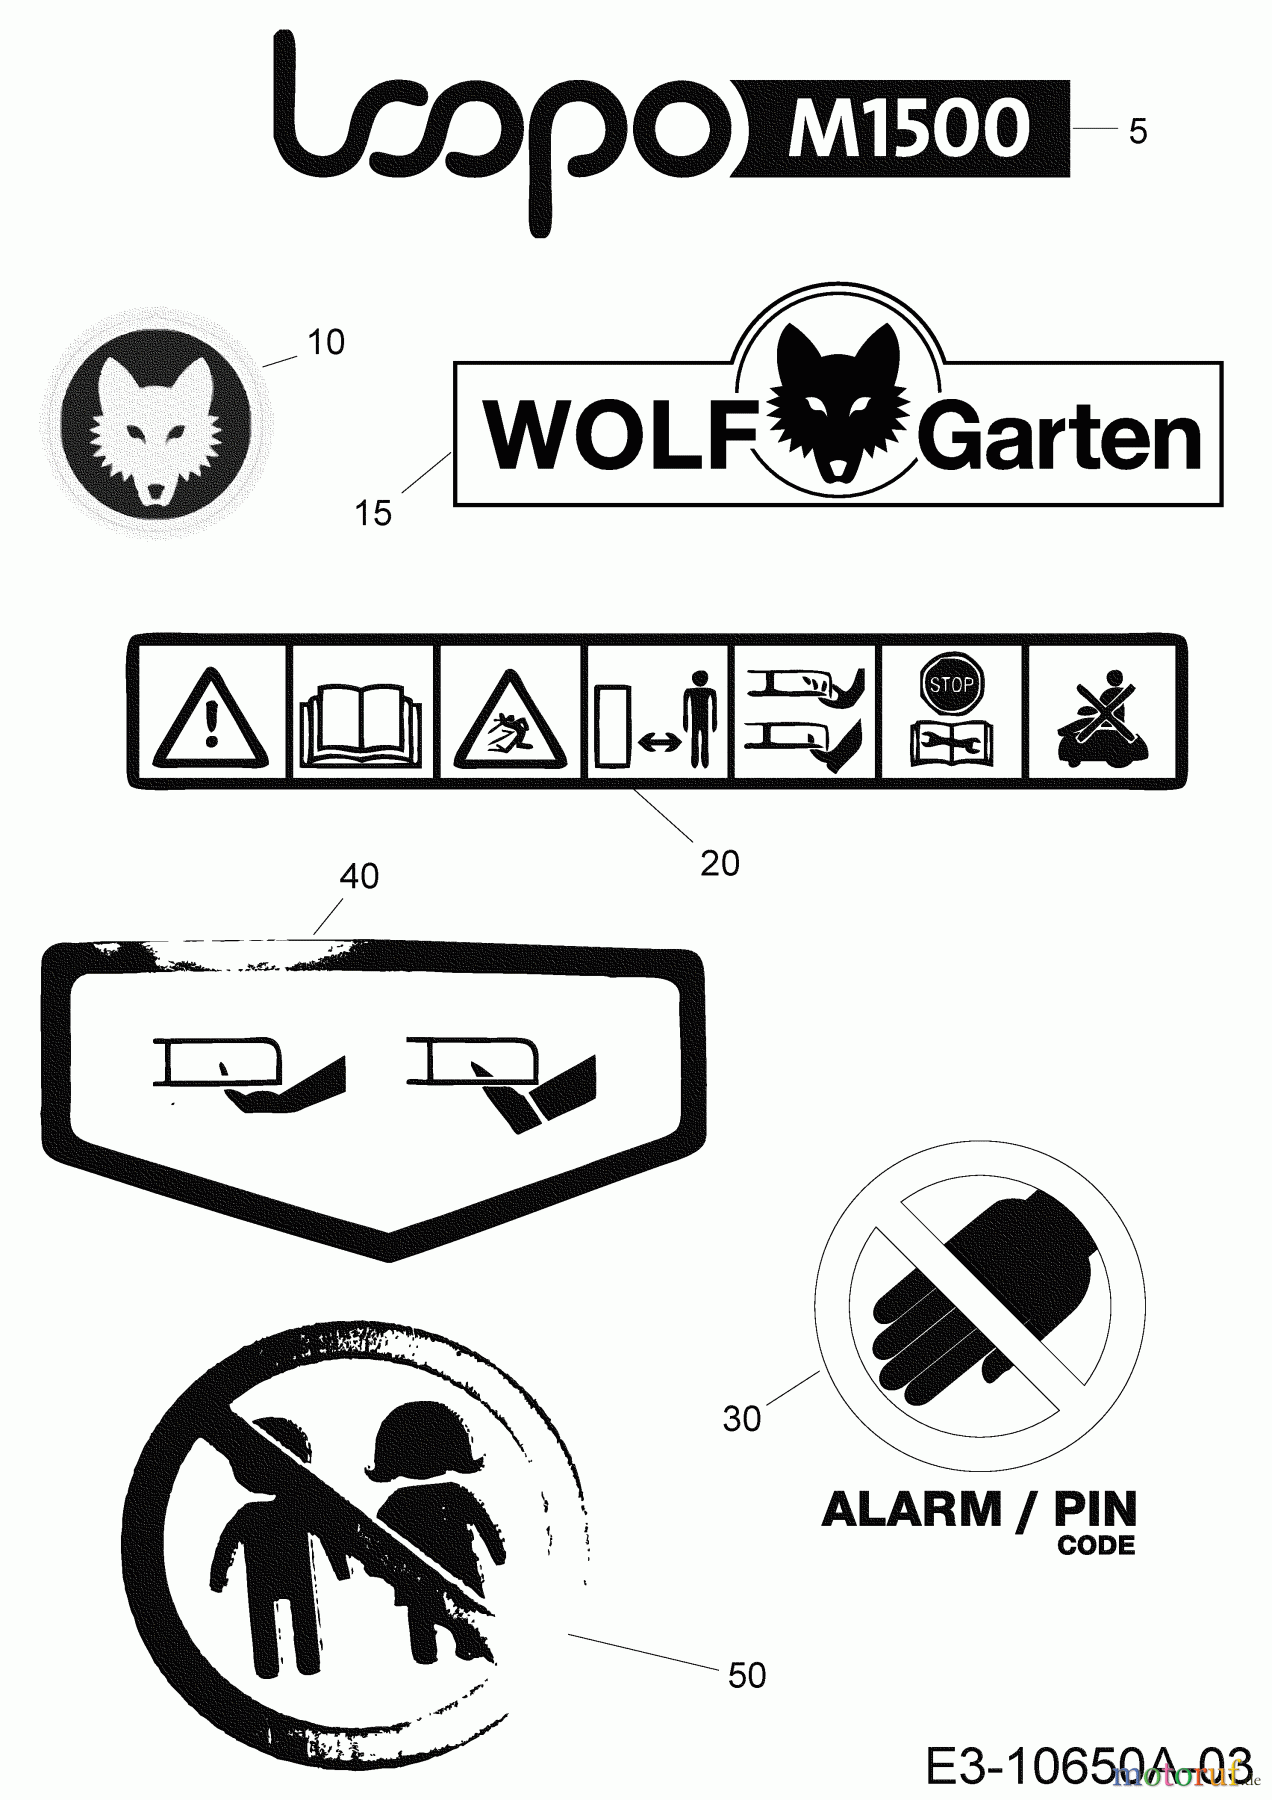  Wolf-Garten Mähroboter Loopo M1500 22BCDAEA650 (2020) Aufkleber